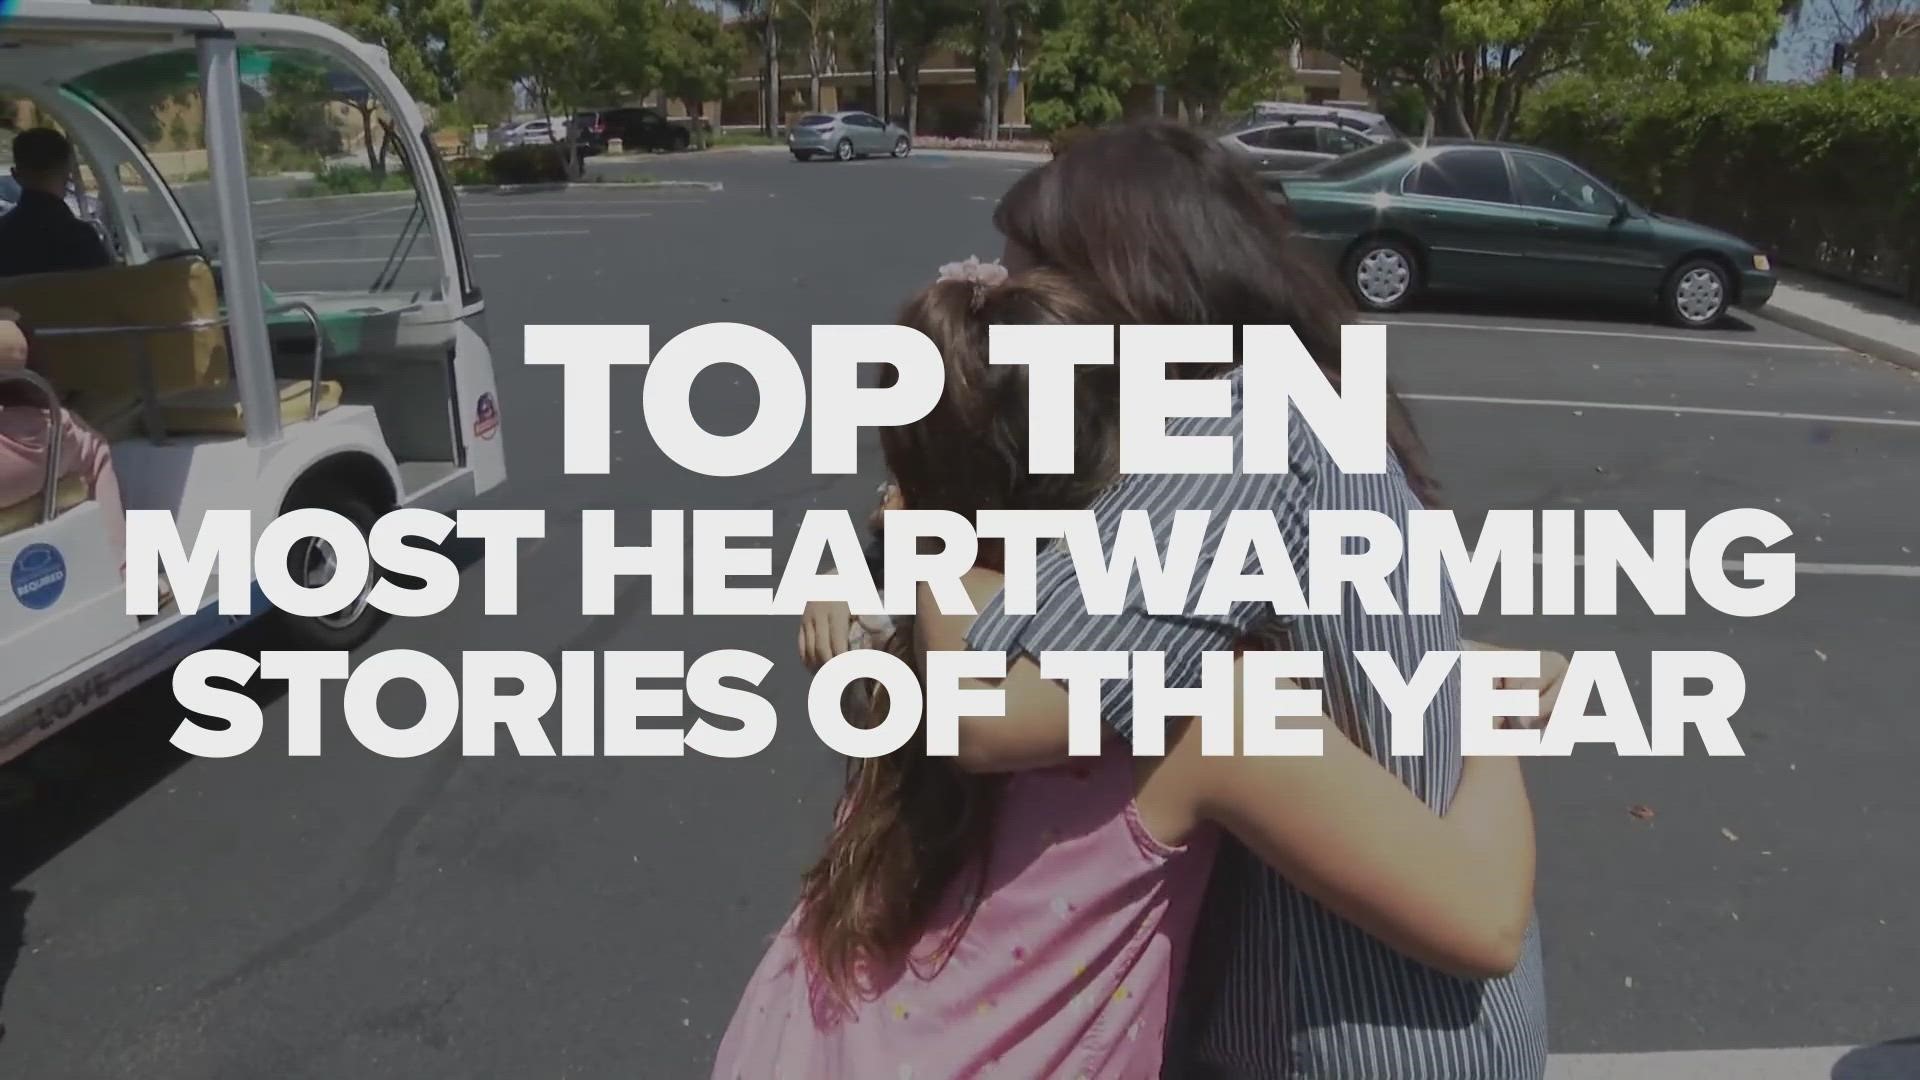 Watch the top ten most heartwarming stories from 2021.